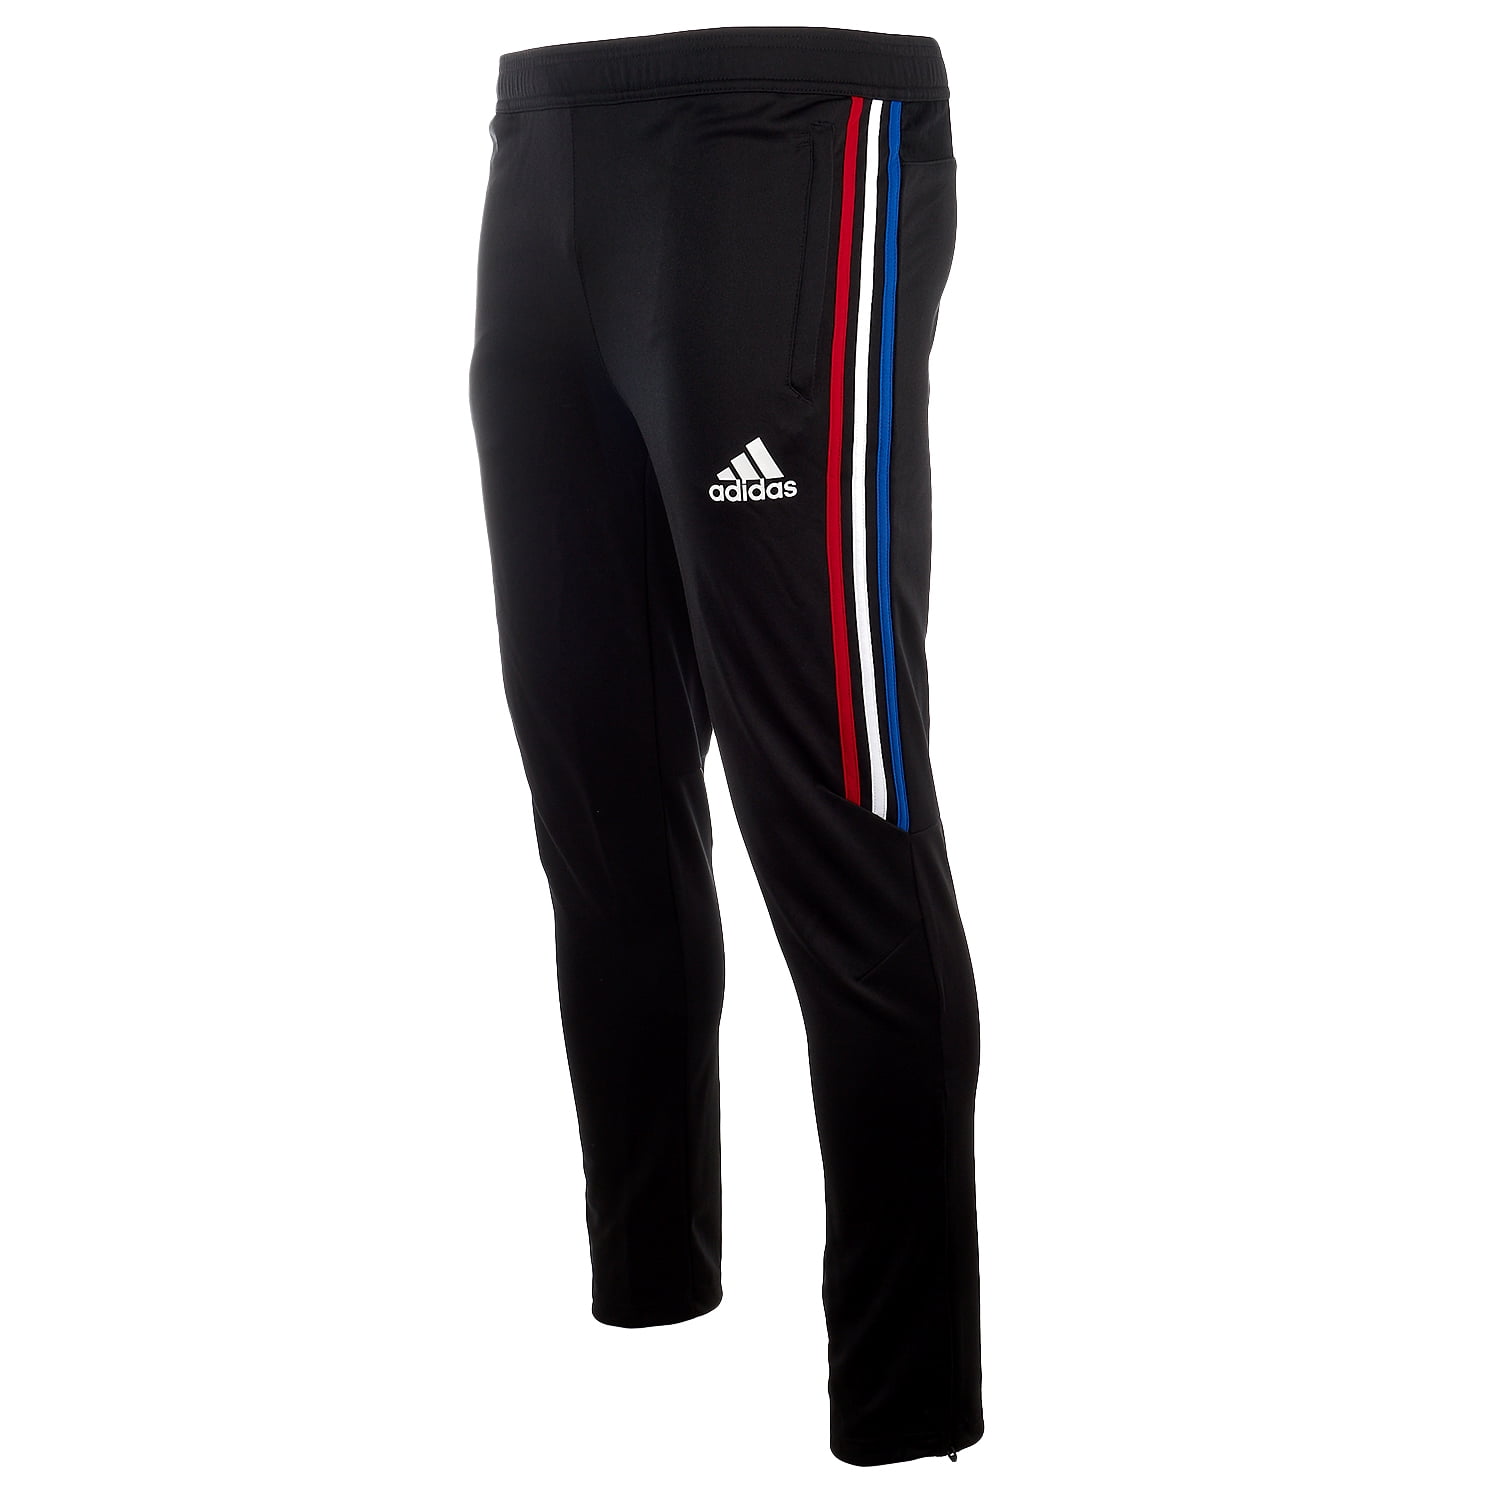 Adidas TIRO 17 Training Pants - Black / Power Red / White / Bold Blue